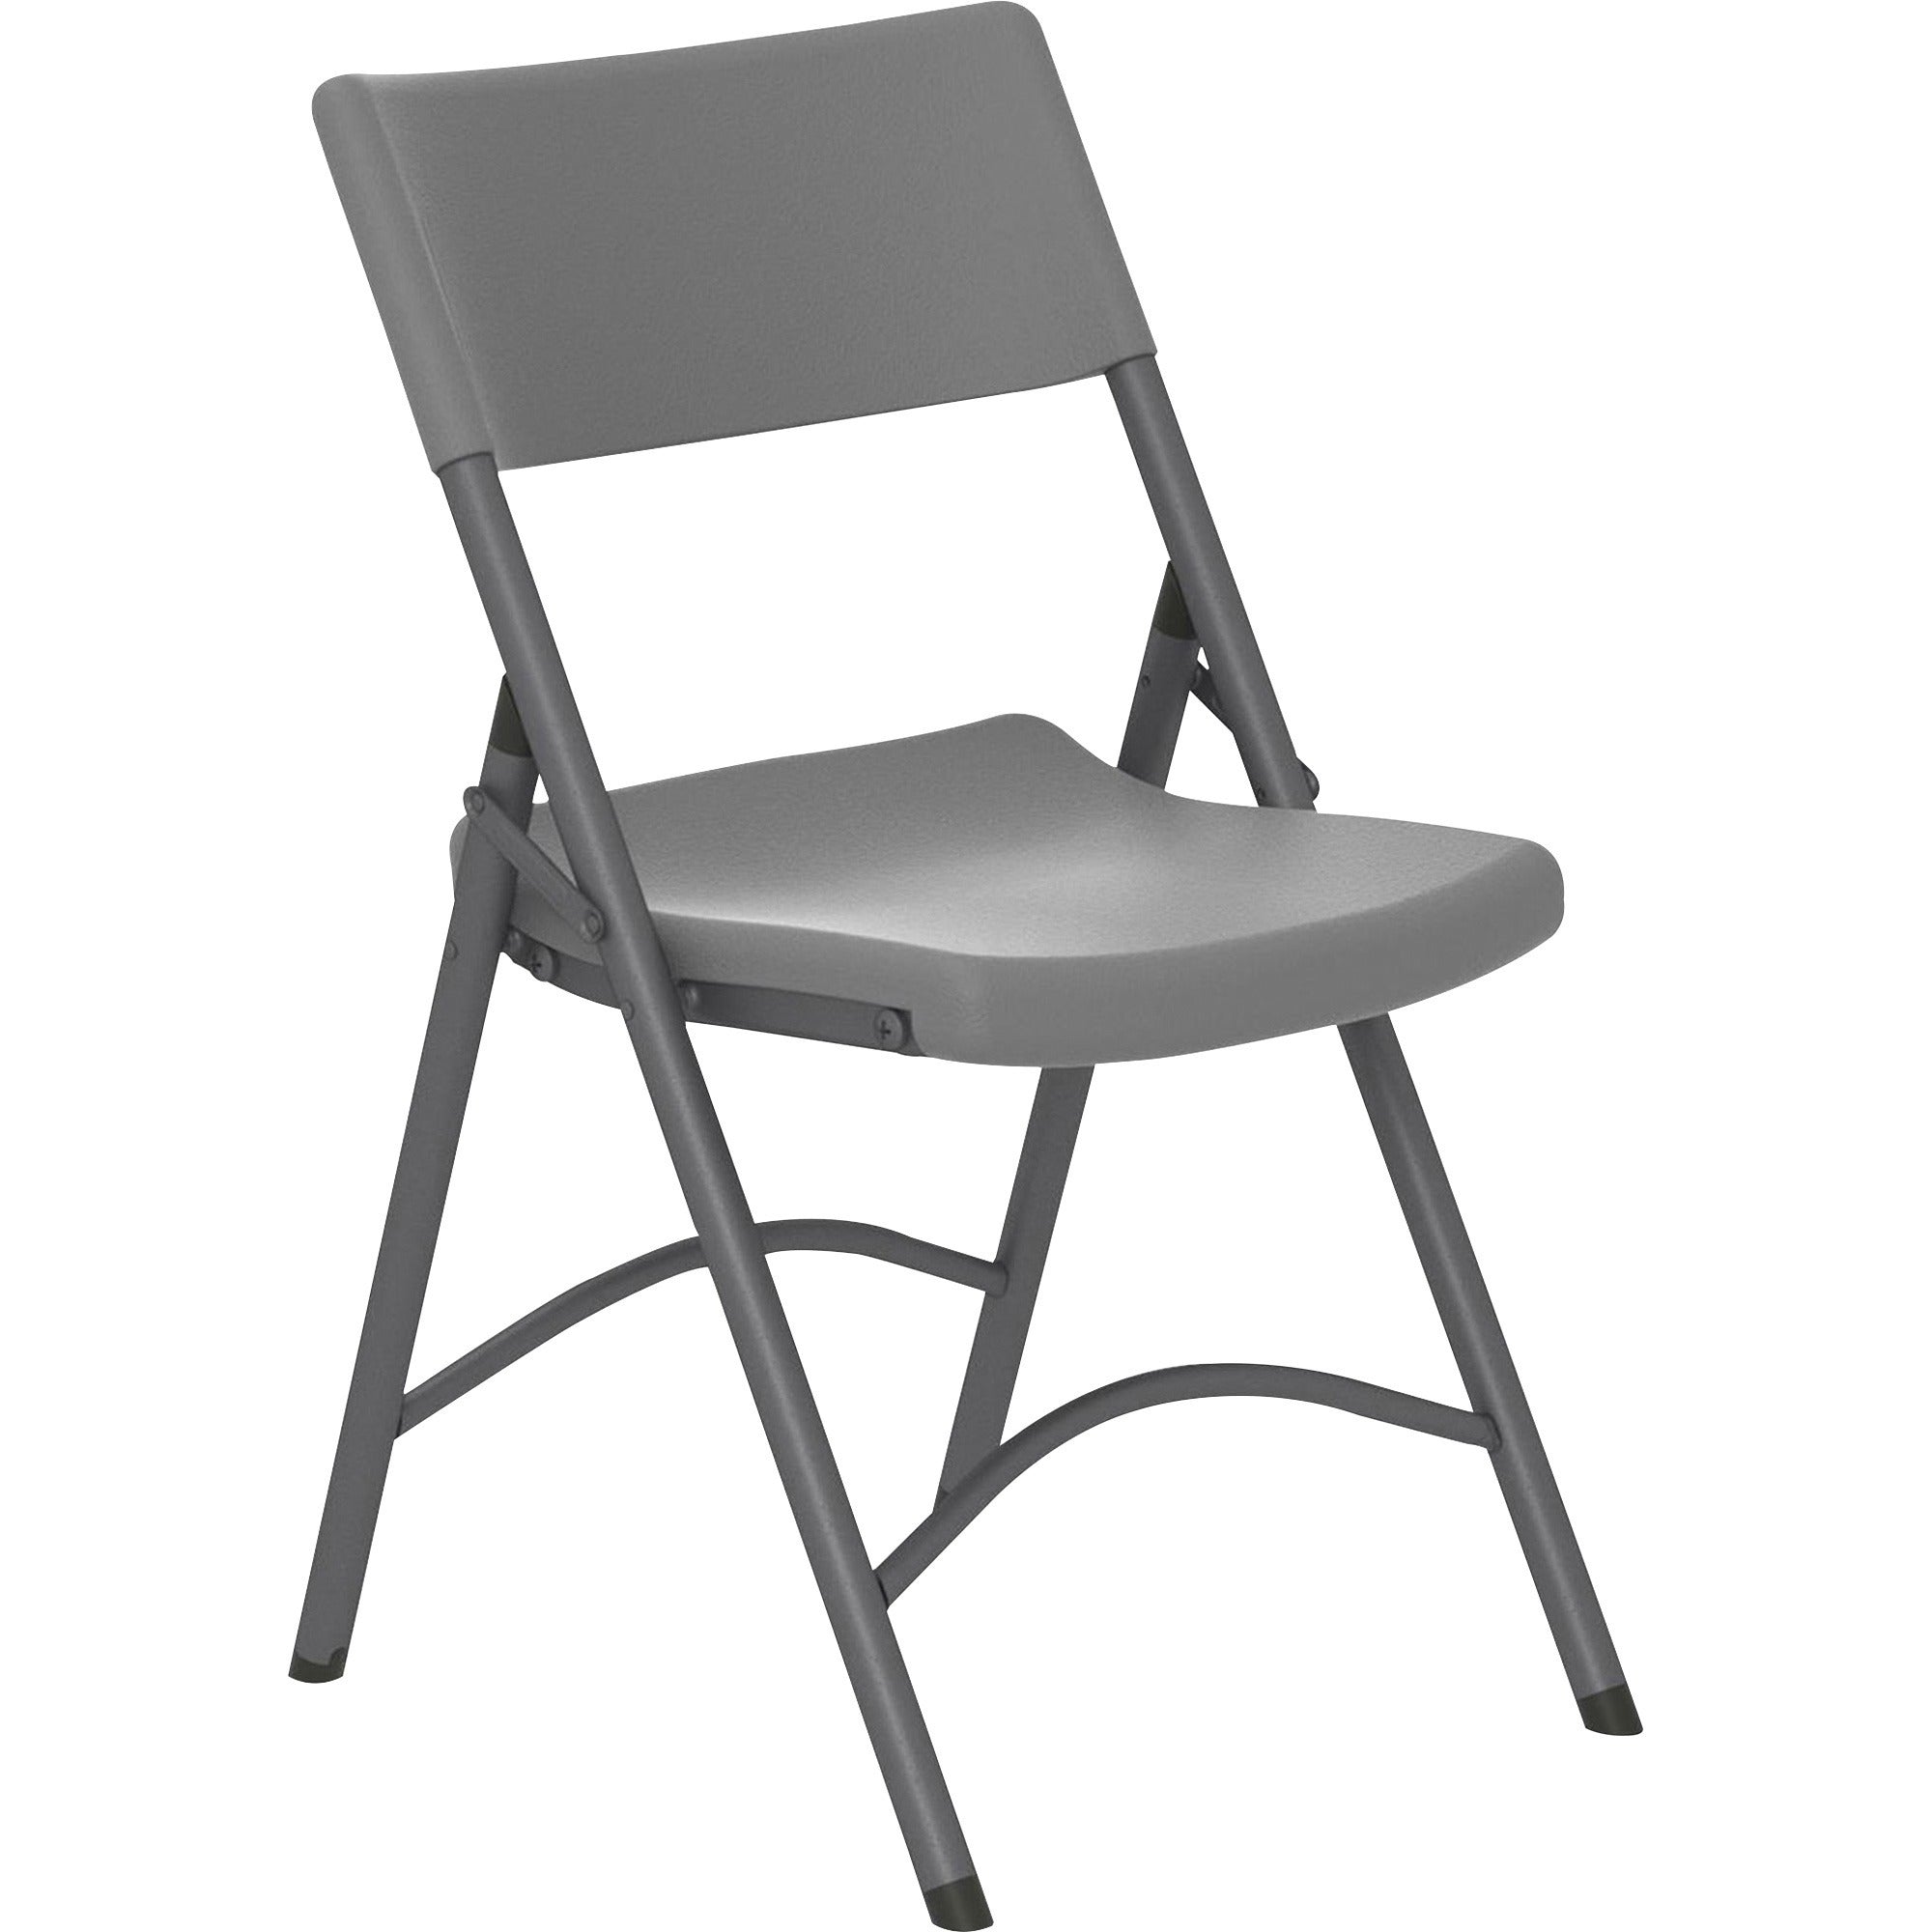 Cosco Zown Classic Commercial Resin Folding Chair - Gray Seat - Gray Back - Gray Steel, High Density Resin, High-density Polyethylene (HDPE) Frame - Four-legged Base - 1 Each - 1